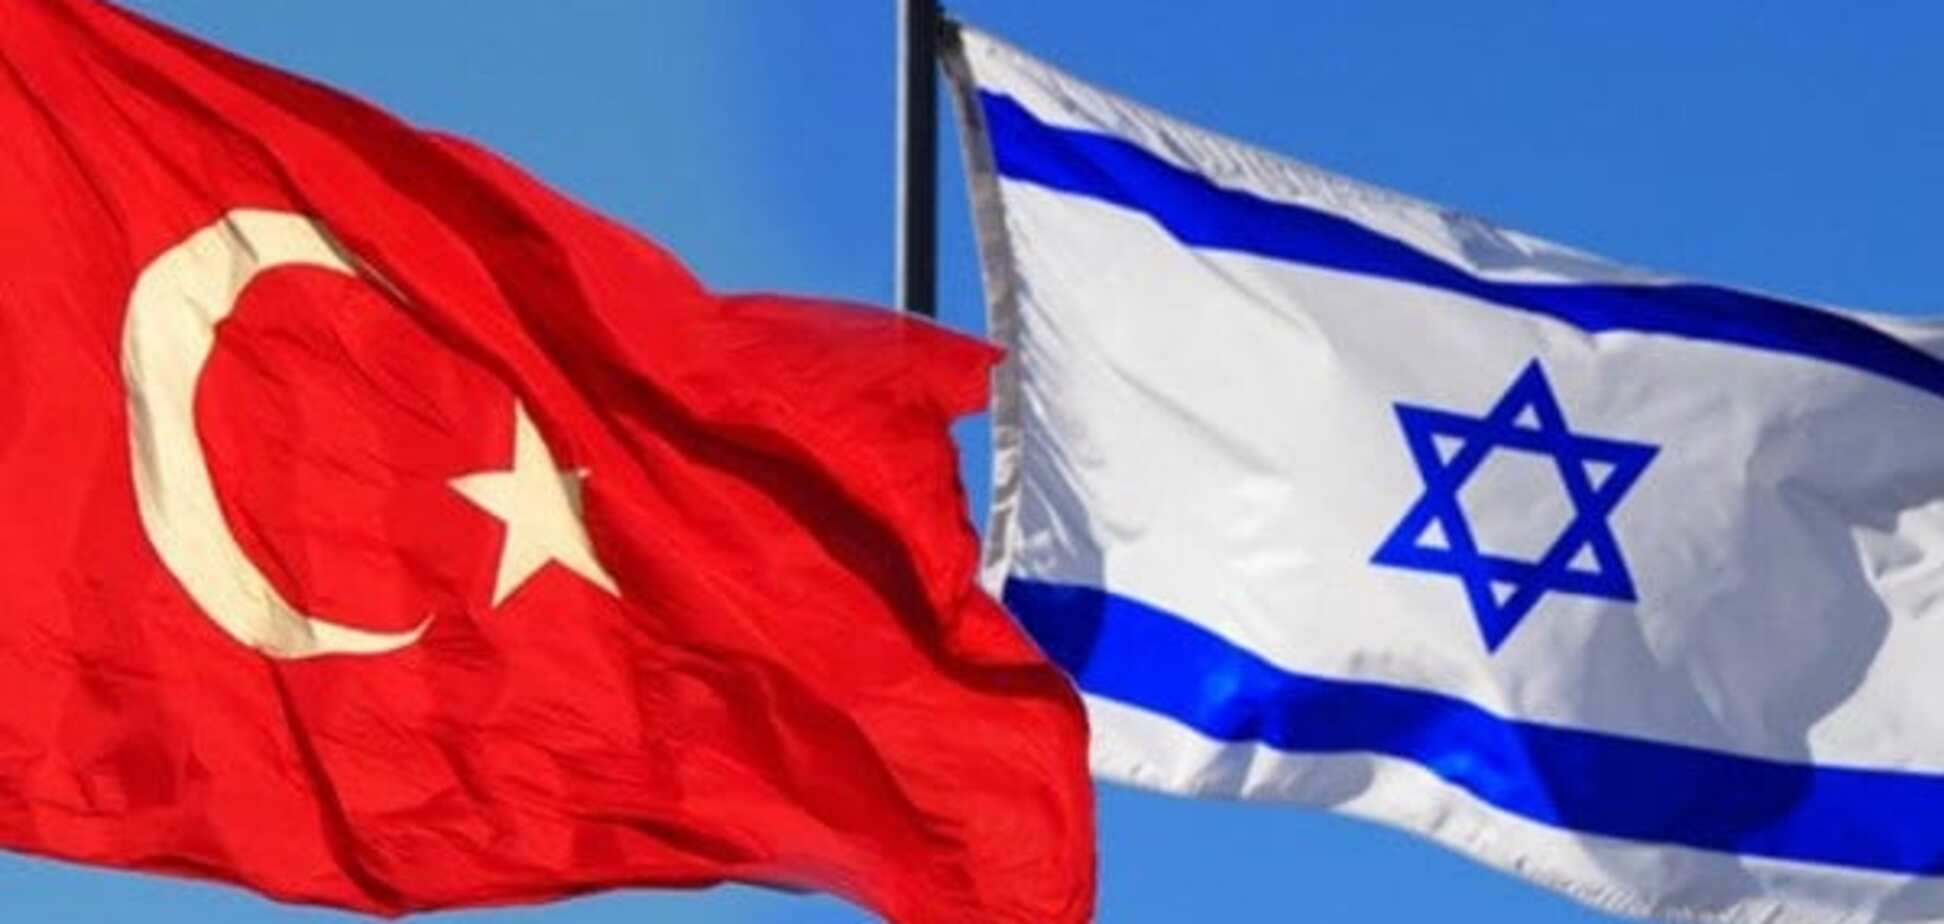 Флаг Турции, флаг Израиля